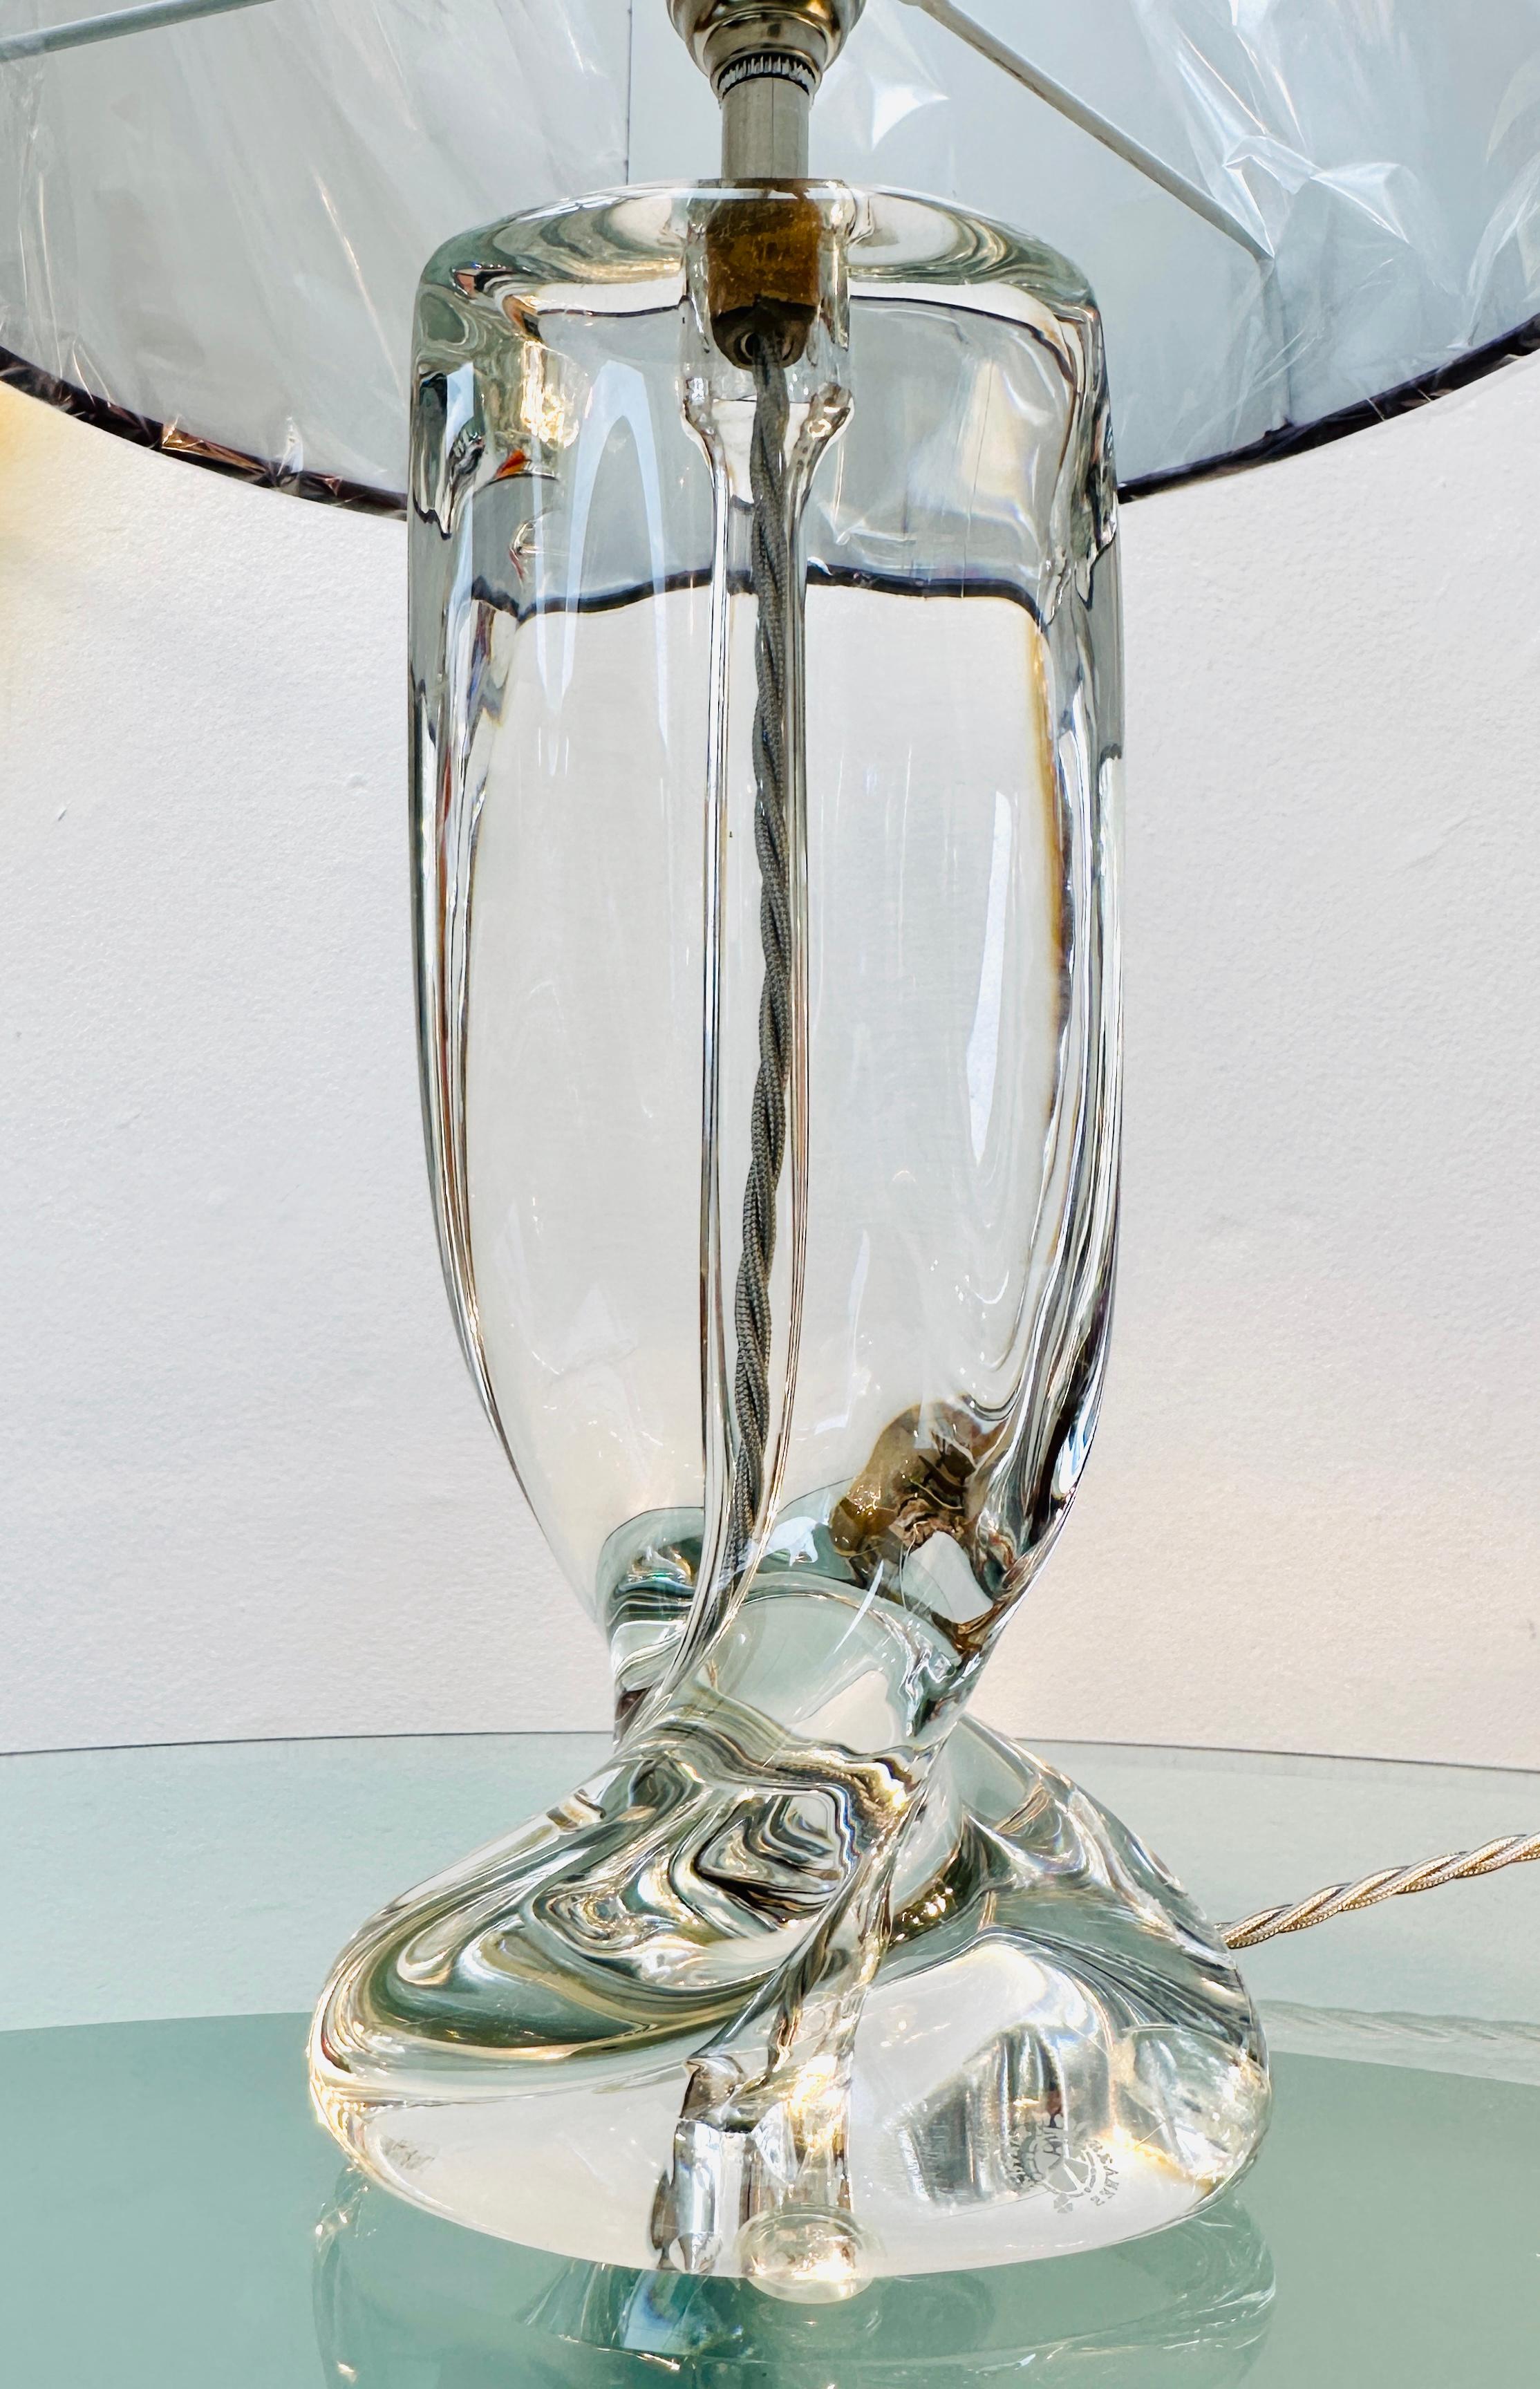 1950s Modernist French Cristalleries De Sèvre Crystal Glass & Chrome Table Lamp For Sale 10